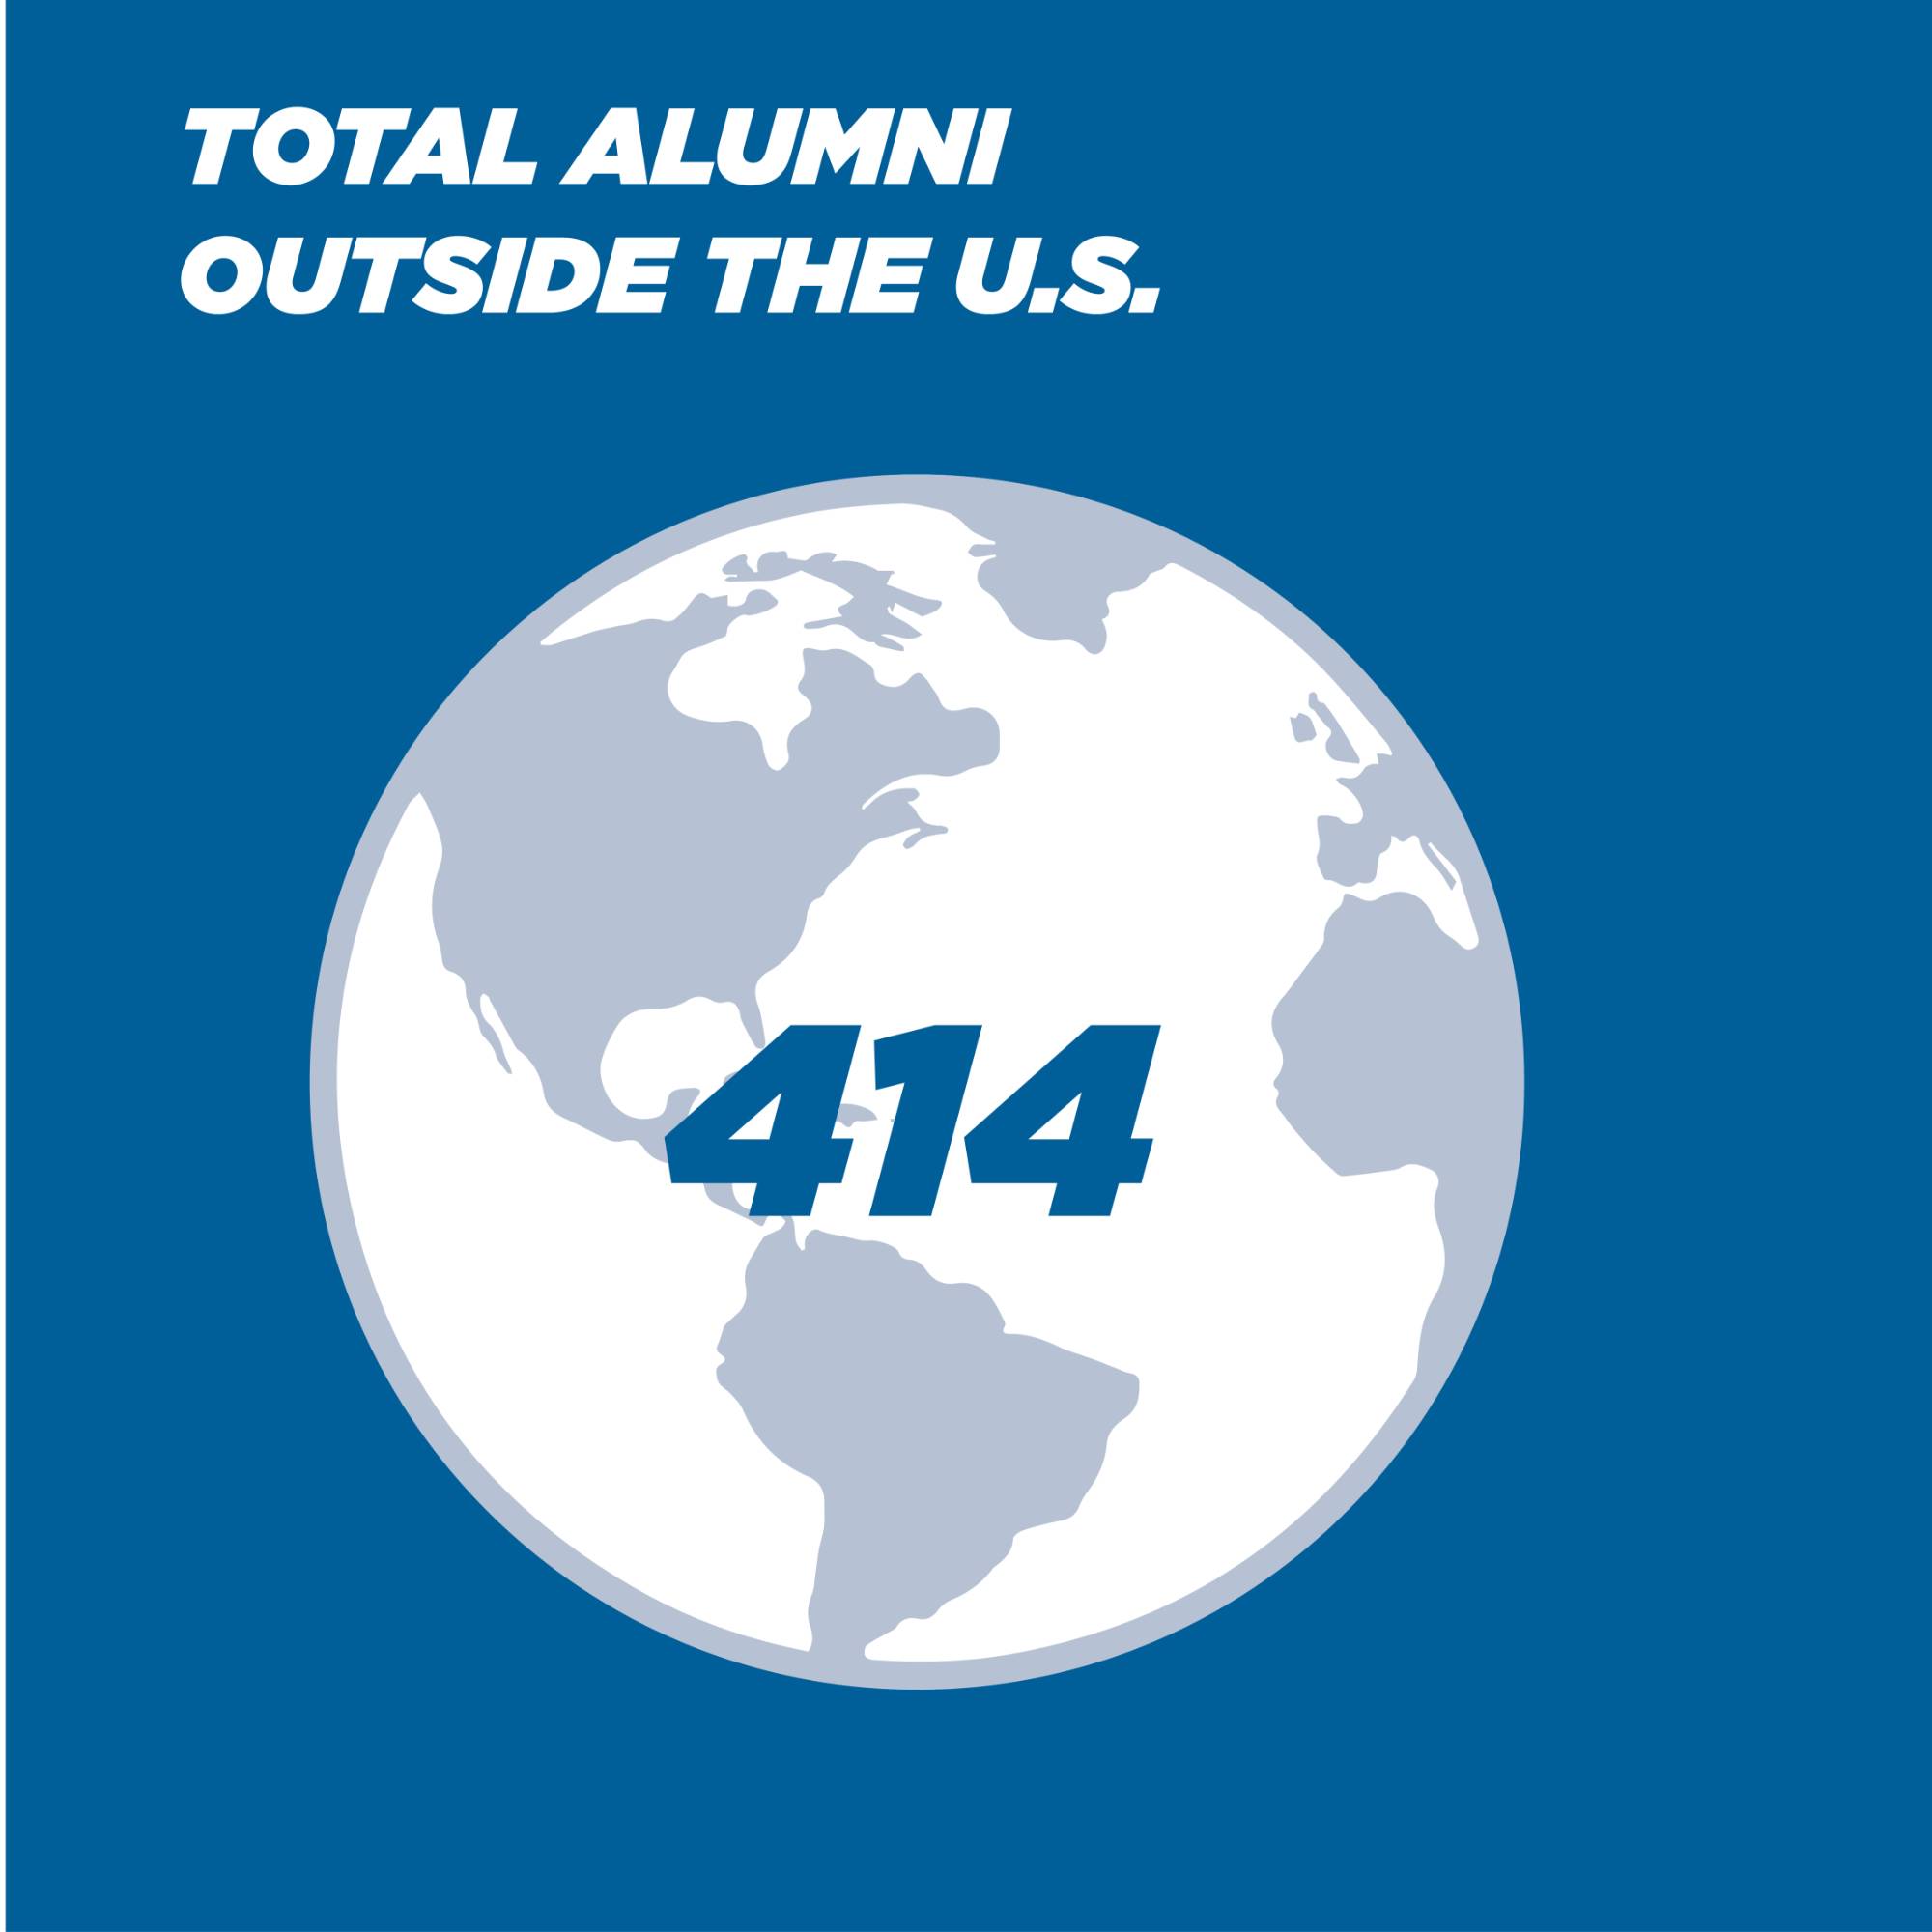 Number of Alumni Outside the U.S.: 414